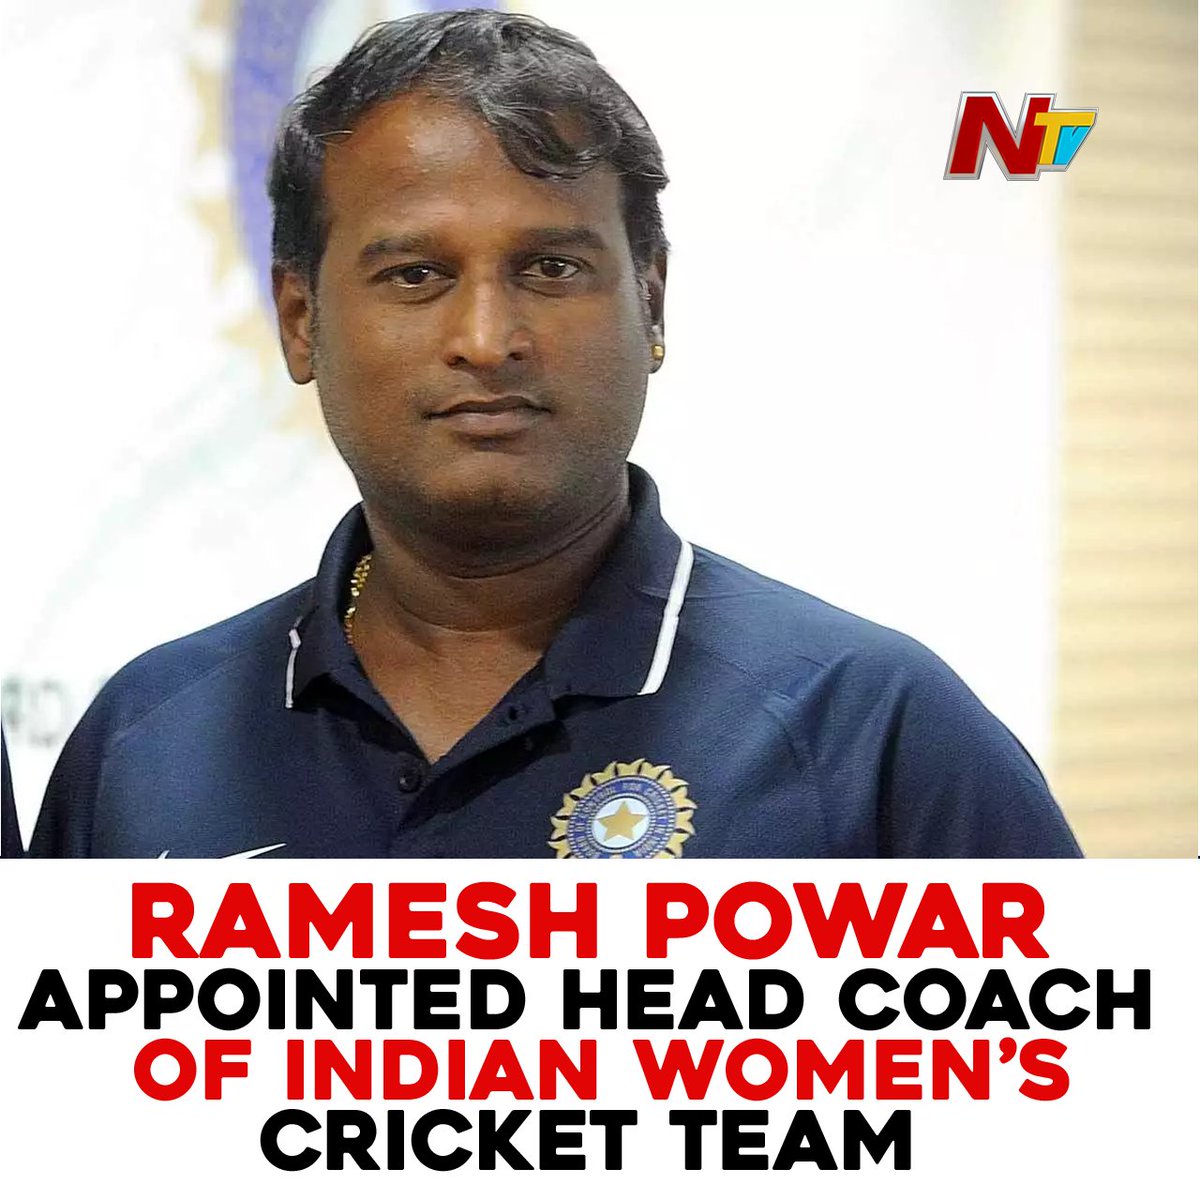 Ramesh Powar appointed head coach of Indian Women’s Cricket Team..

#NTVTelugu #NTVNews #Rameshpowar #IndianWomensCricketTeam